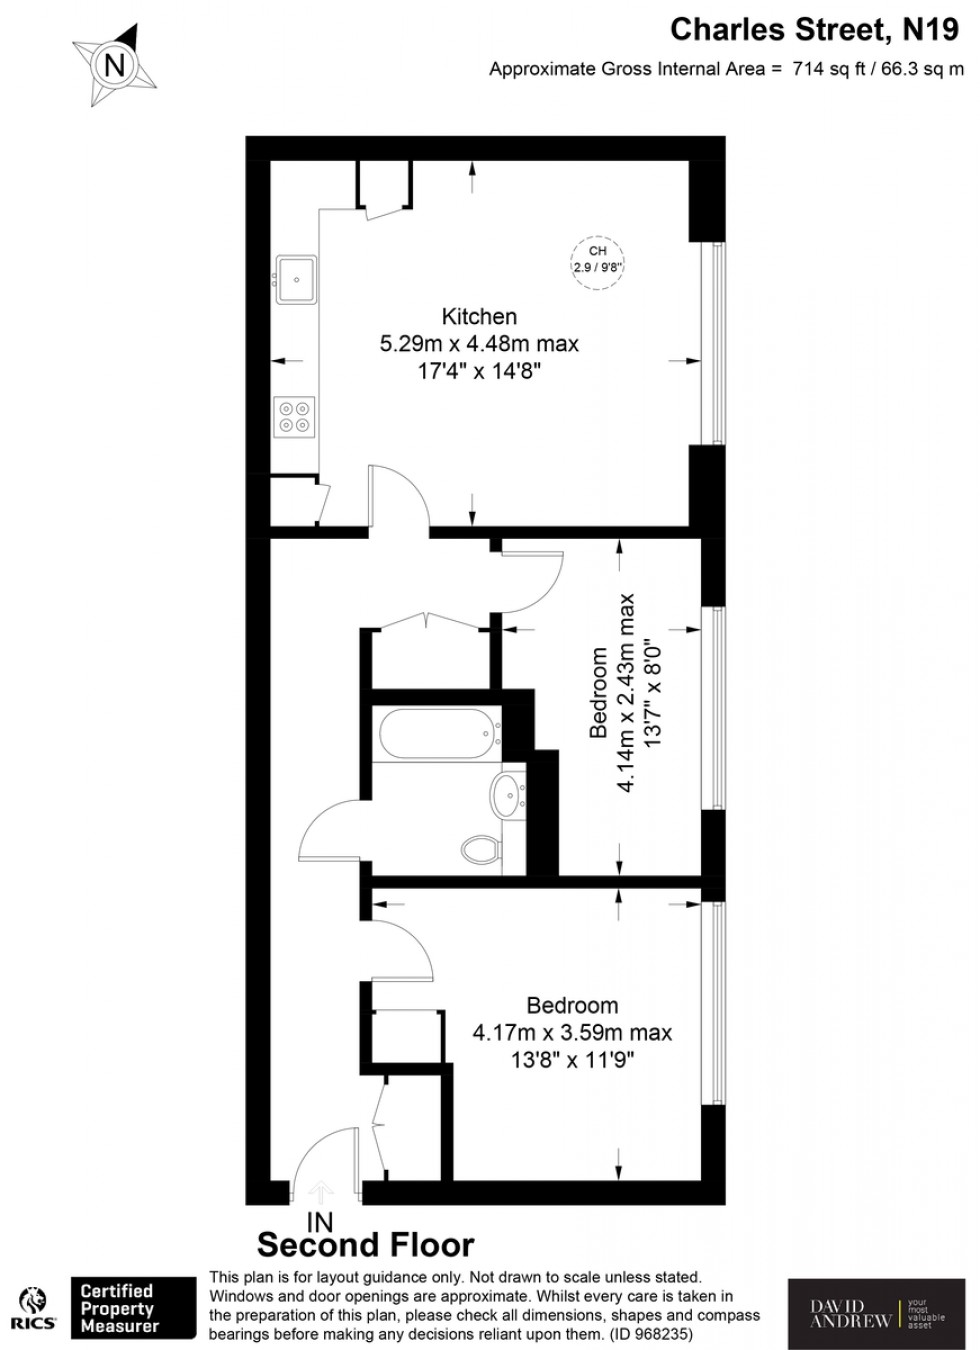 Floorplan for Charles Street, N19 3FA